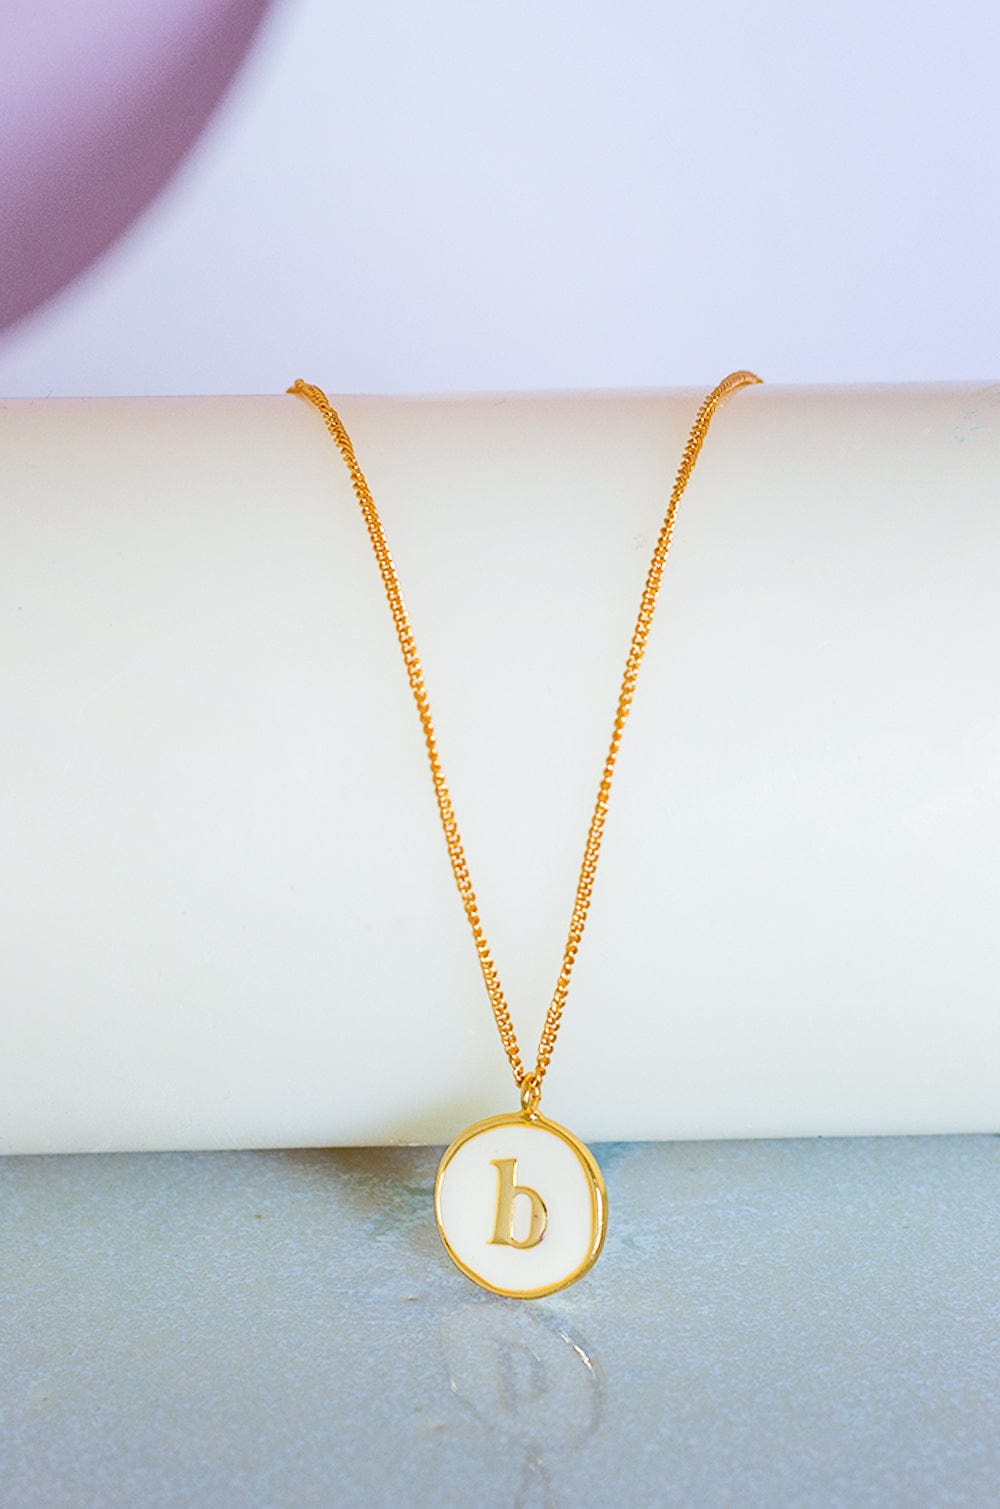 B Monogram Pendant with Necklace